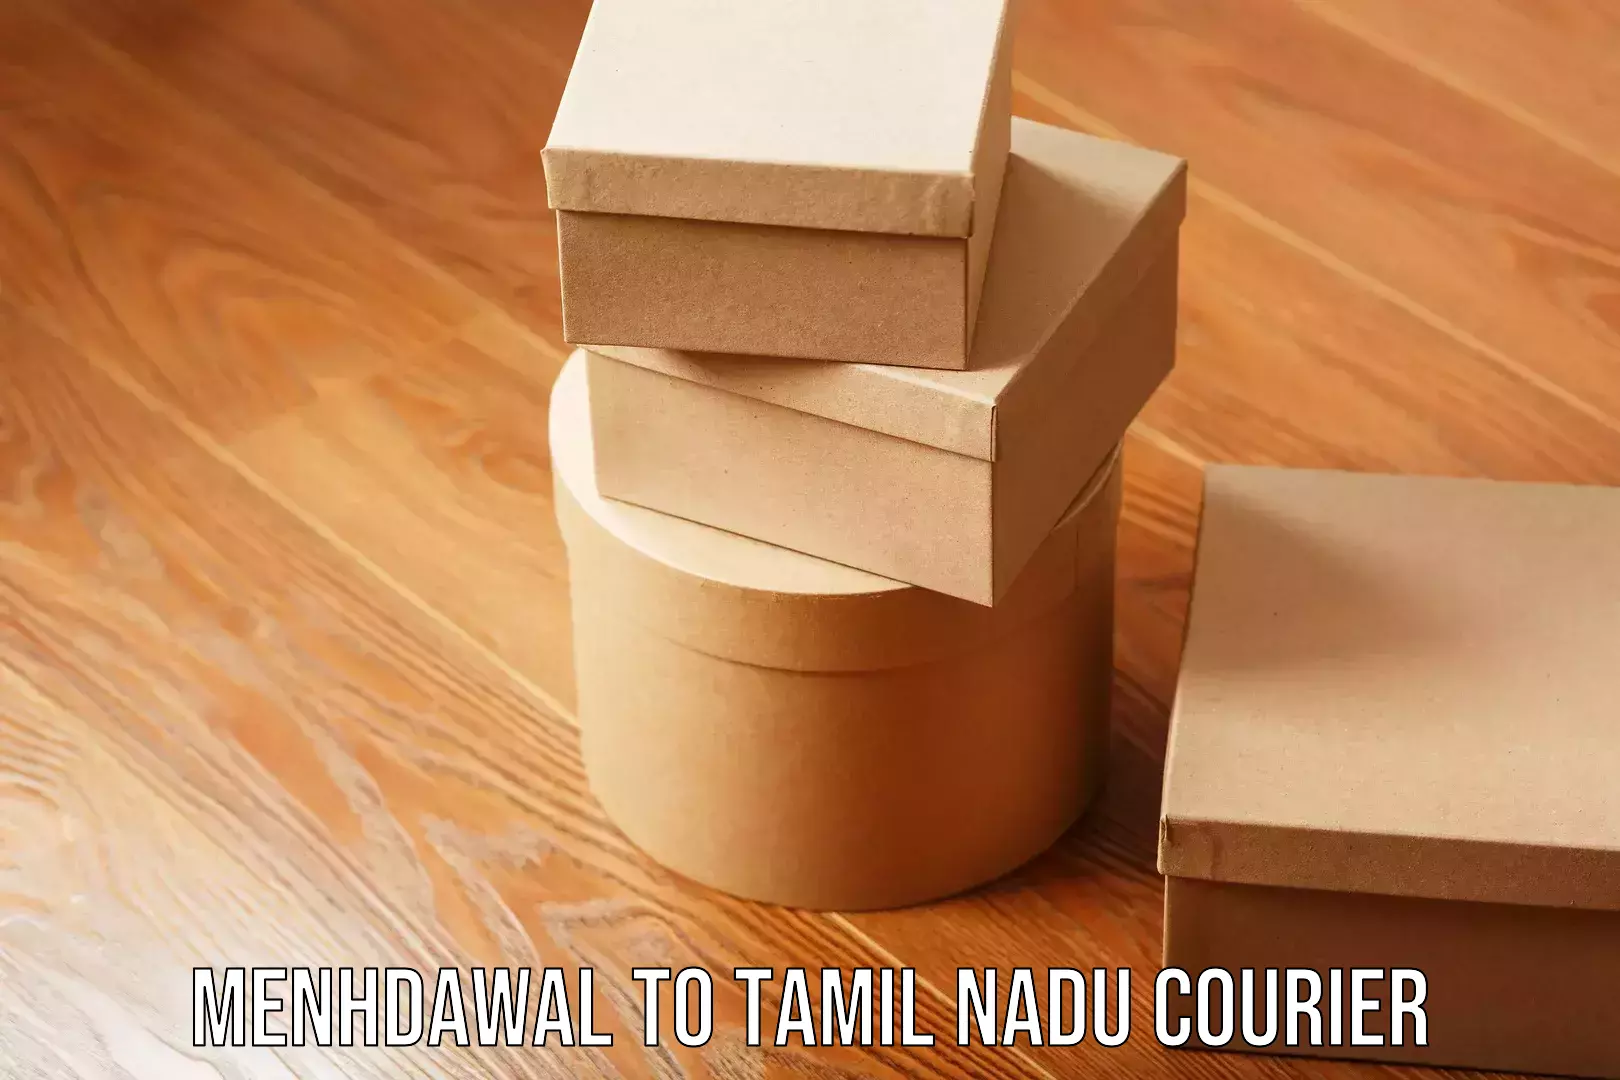 Stress-free moving Menhdawal to Tamil Nadu